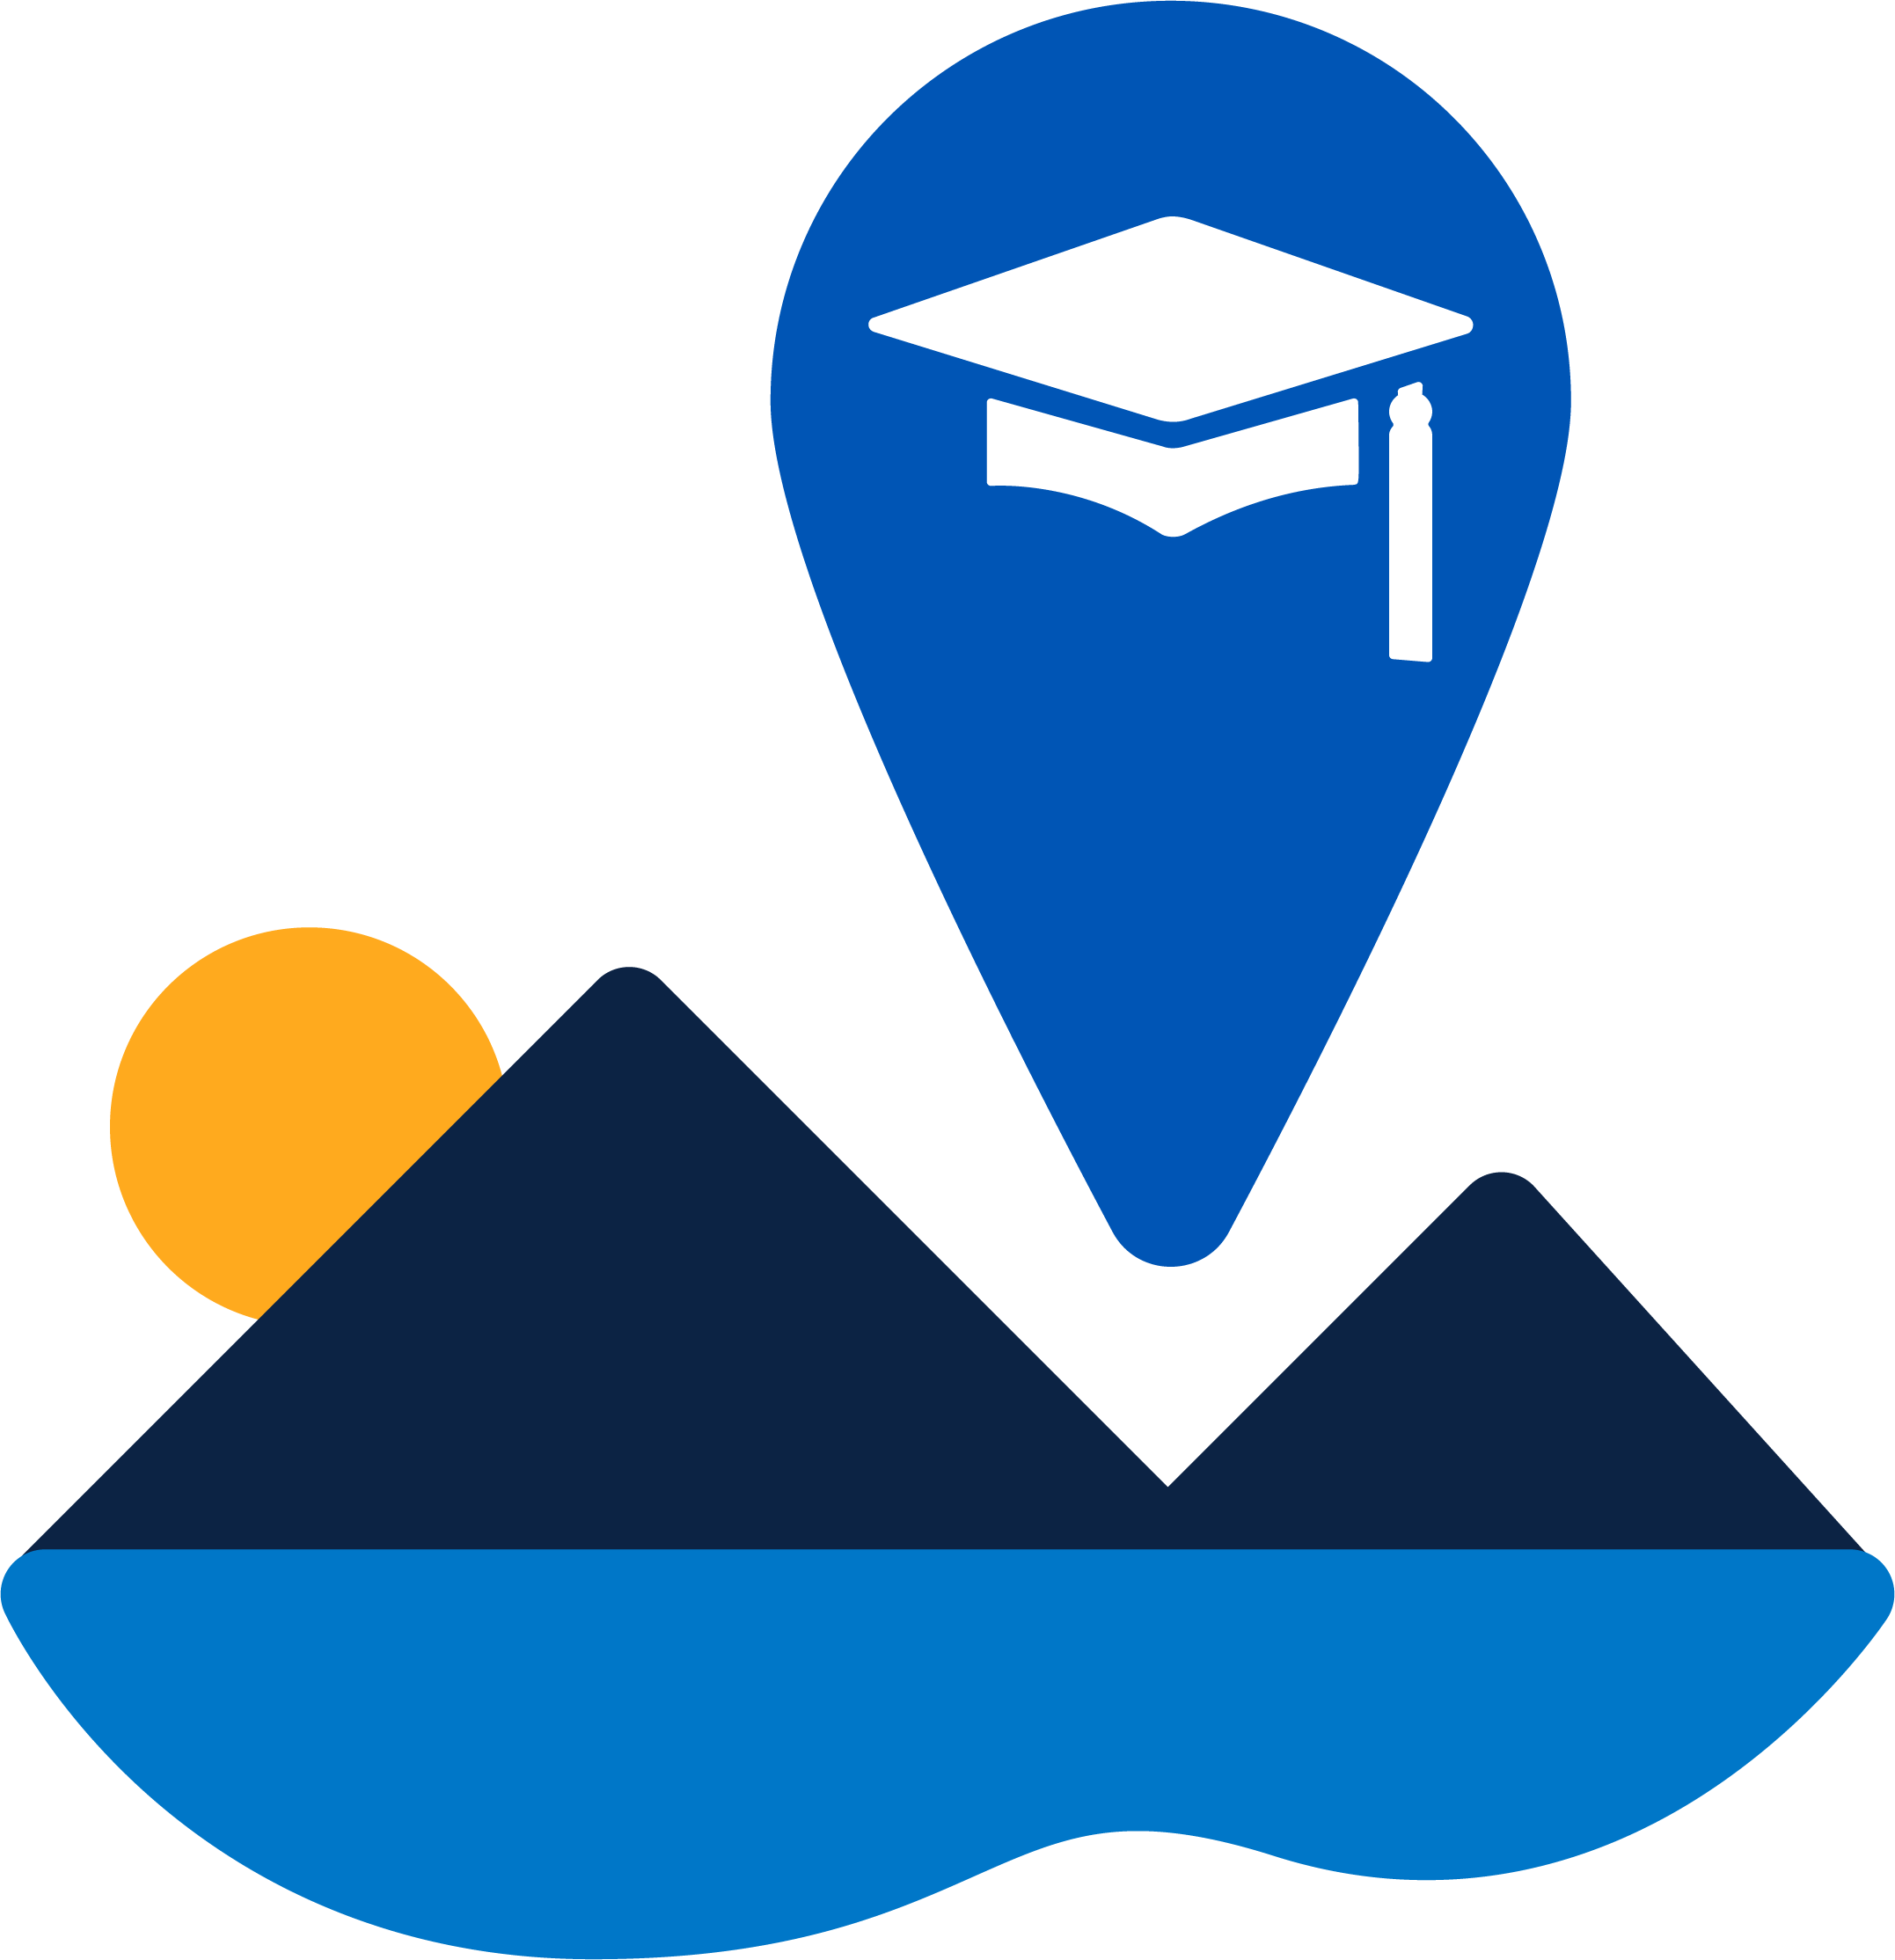 Grads located in Okanagan icon